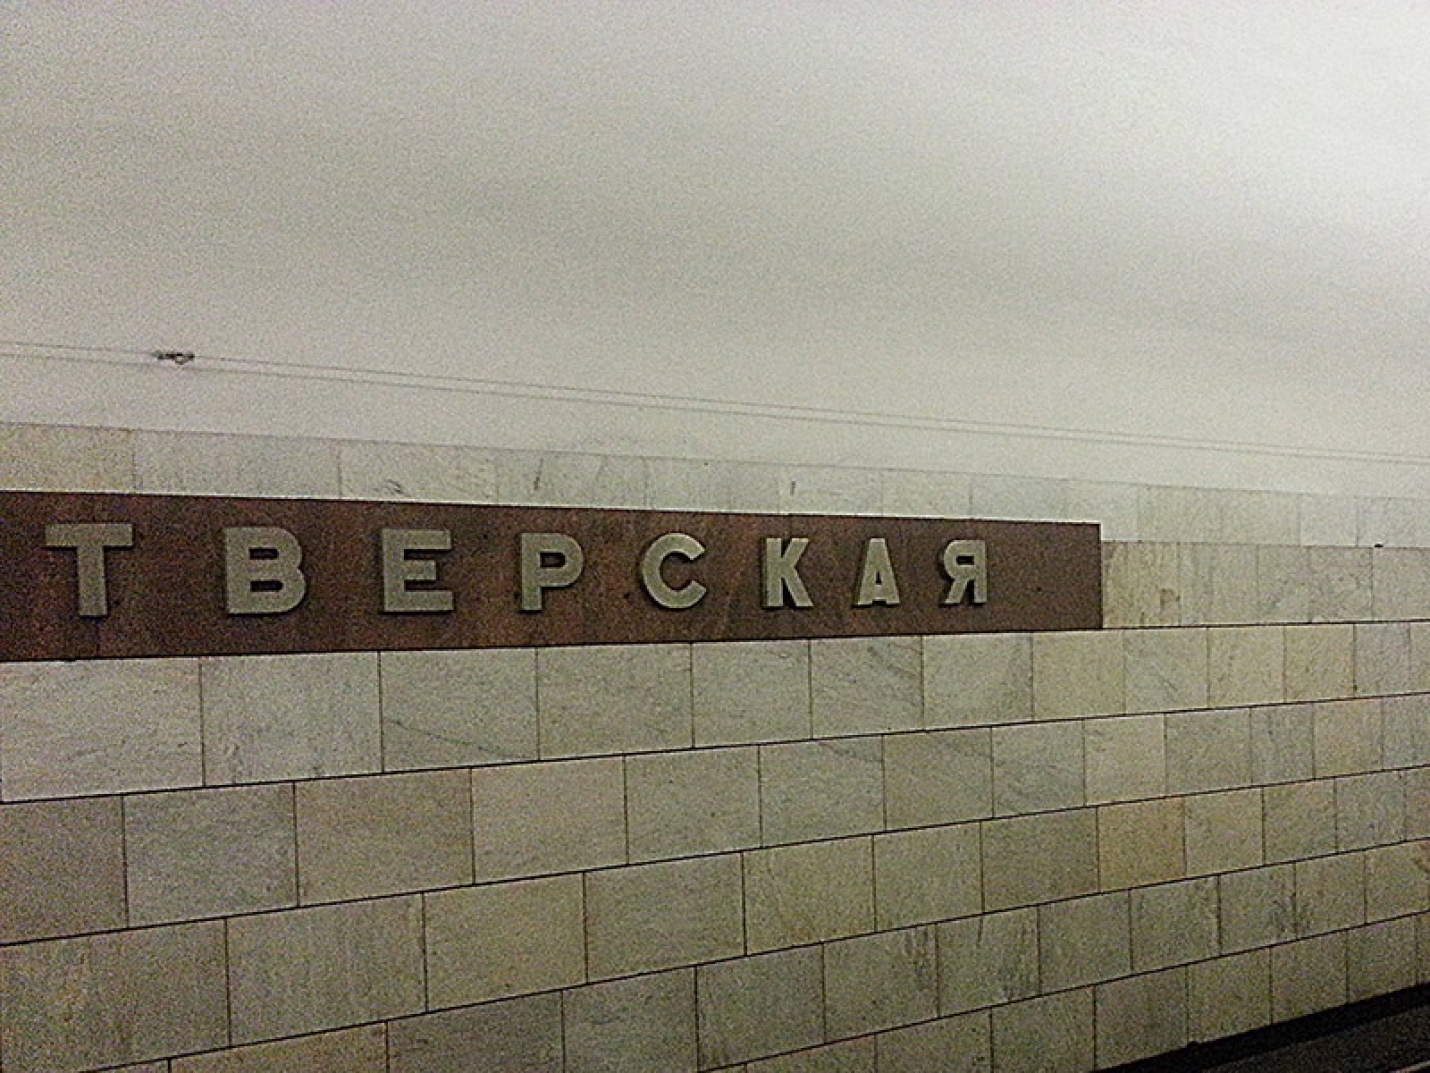 станция метро тверская москва